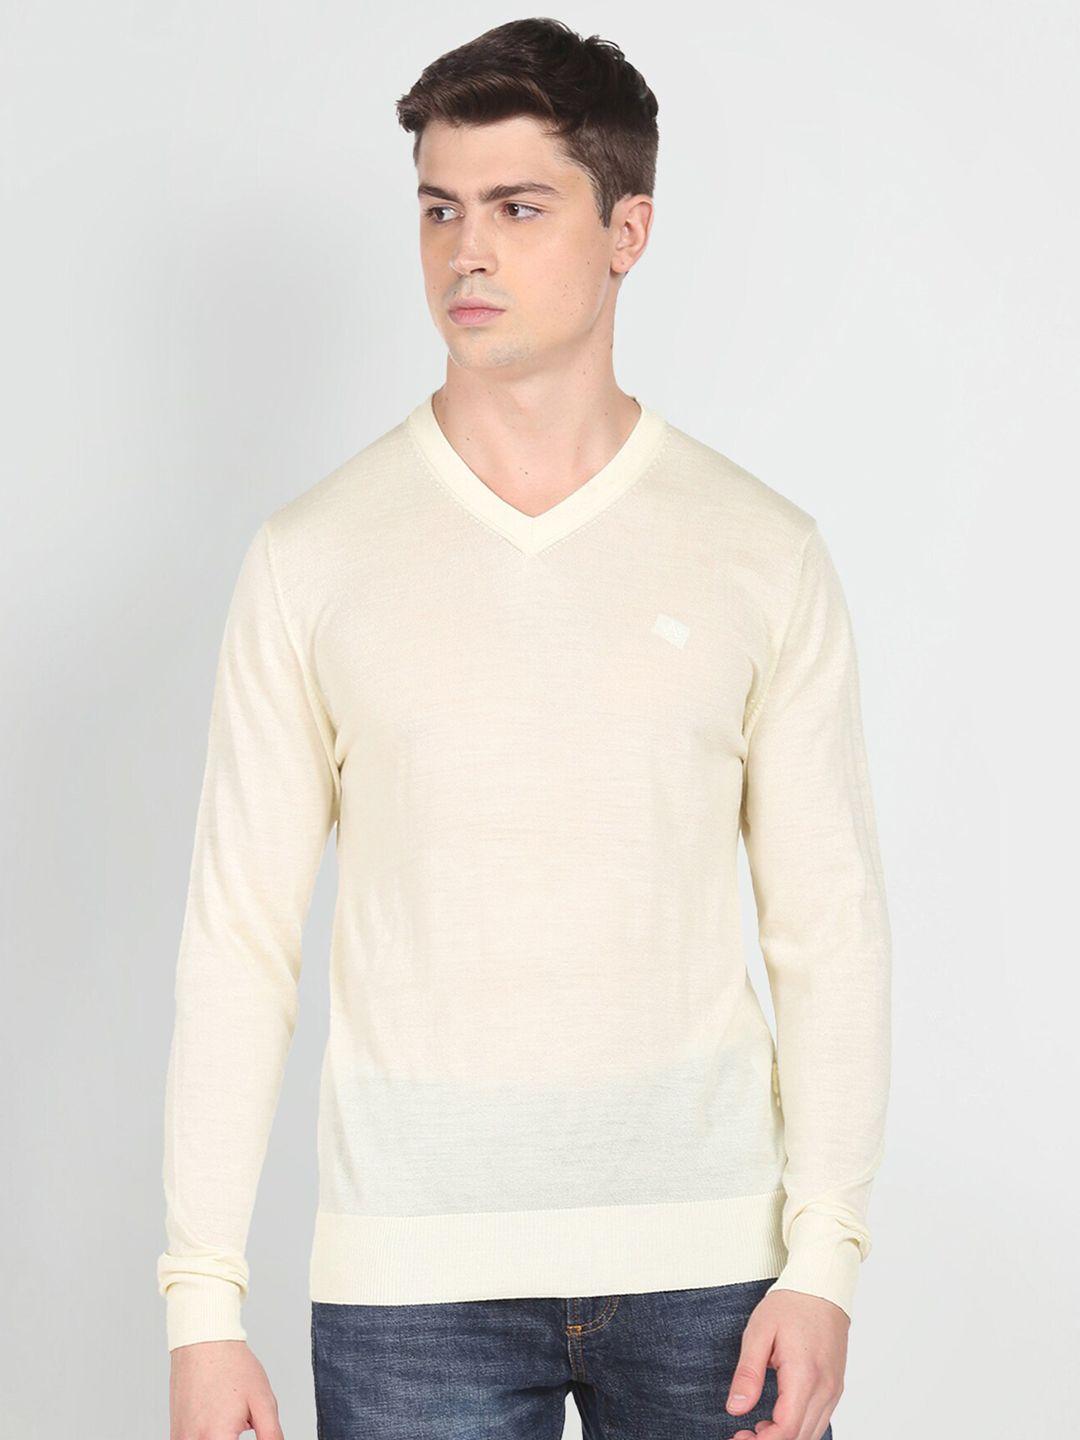 arrow-v-neck-pullover-sweater